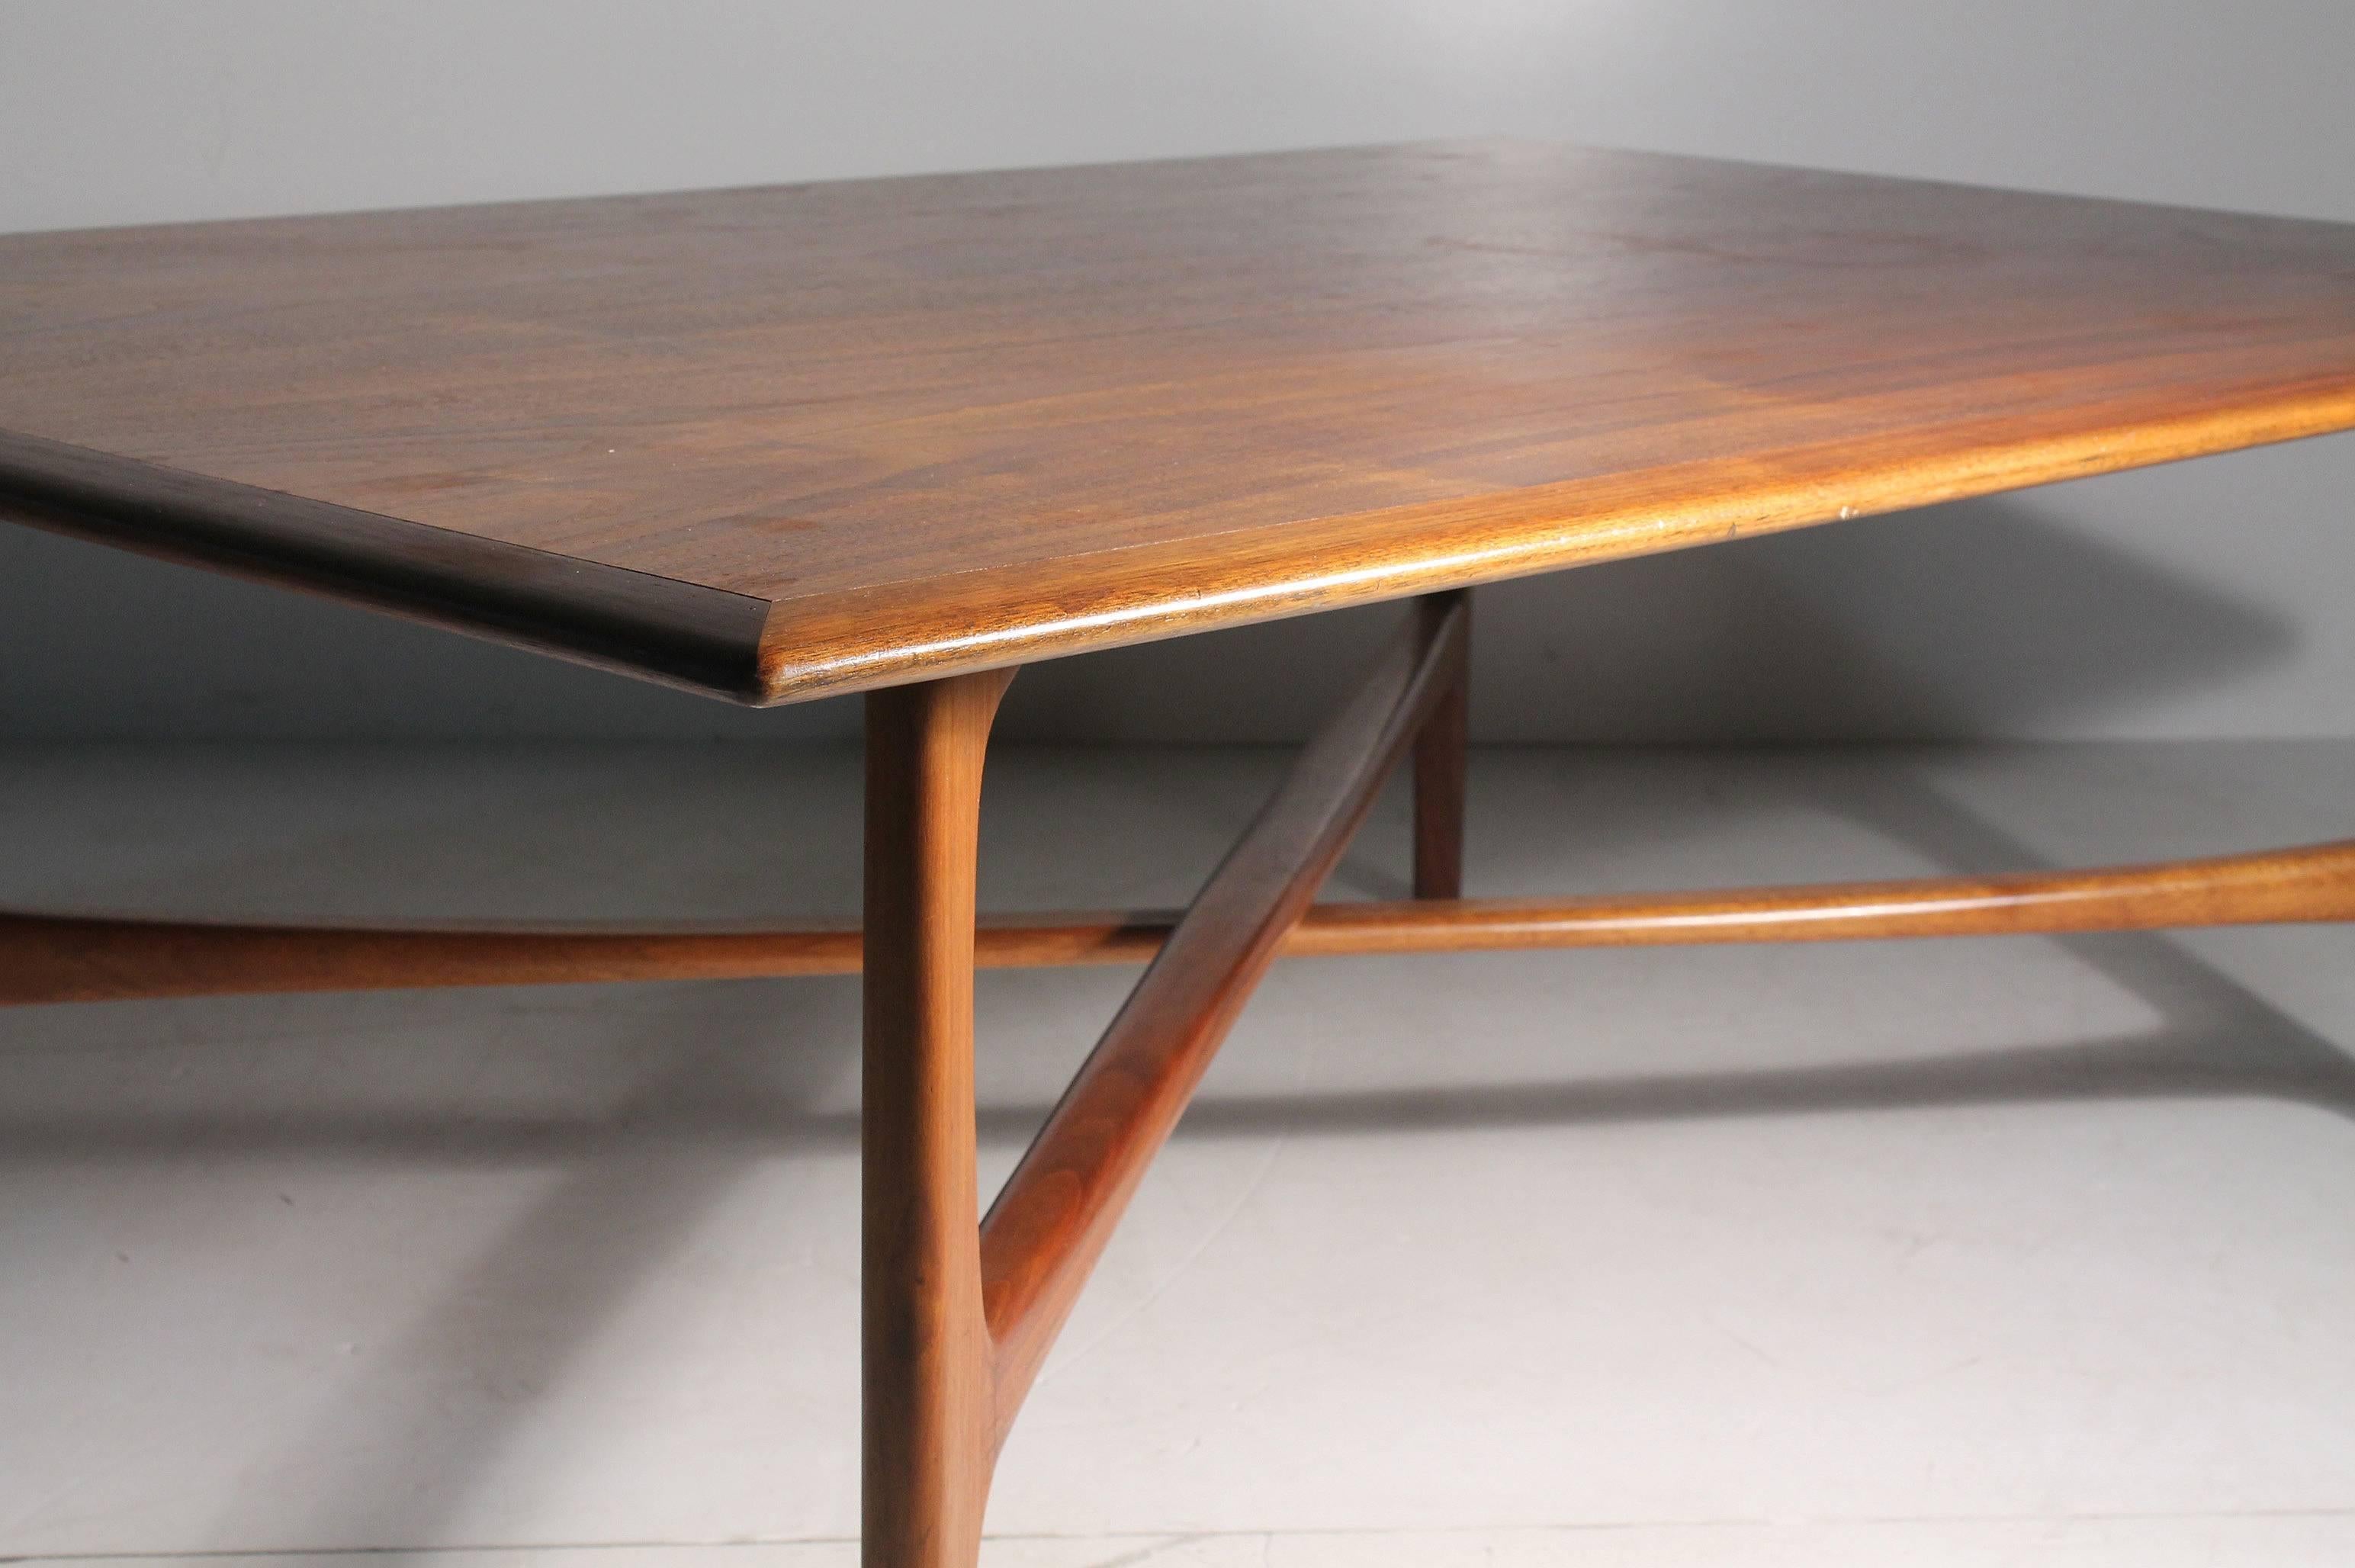 Mid-Century Modern Danish Modern DUX Folke Ohlsson Coffee Table with X-Stretcher